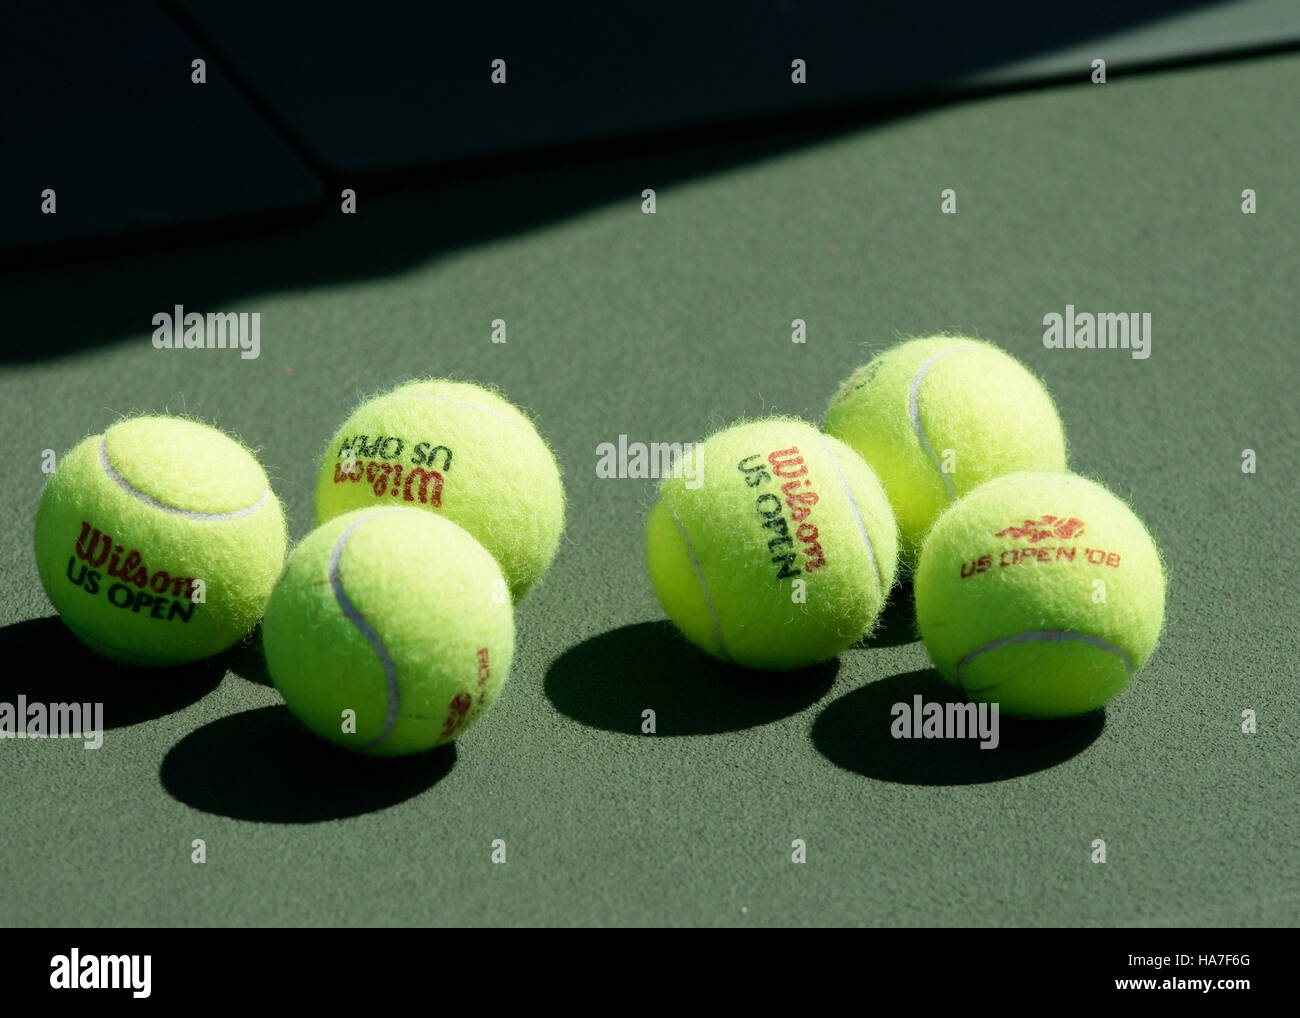 Tennis balls grand slam tournament hi-res stock photography and images -  Alamy